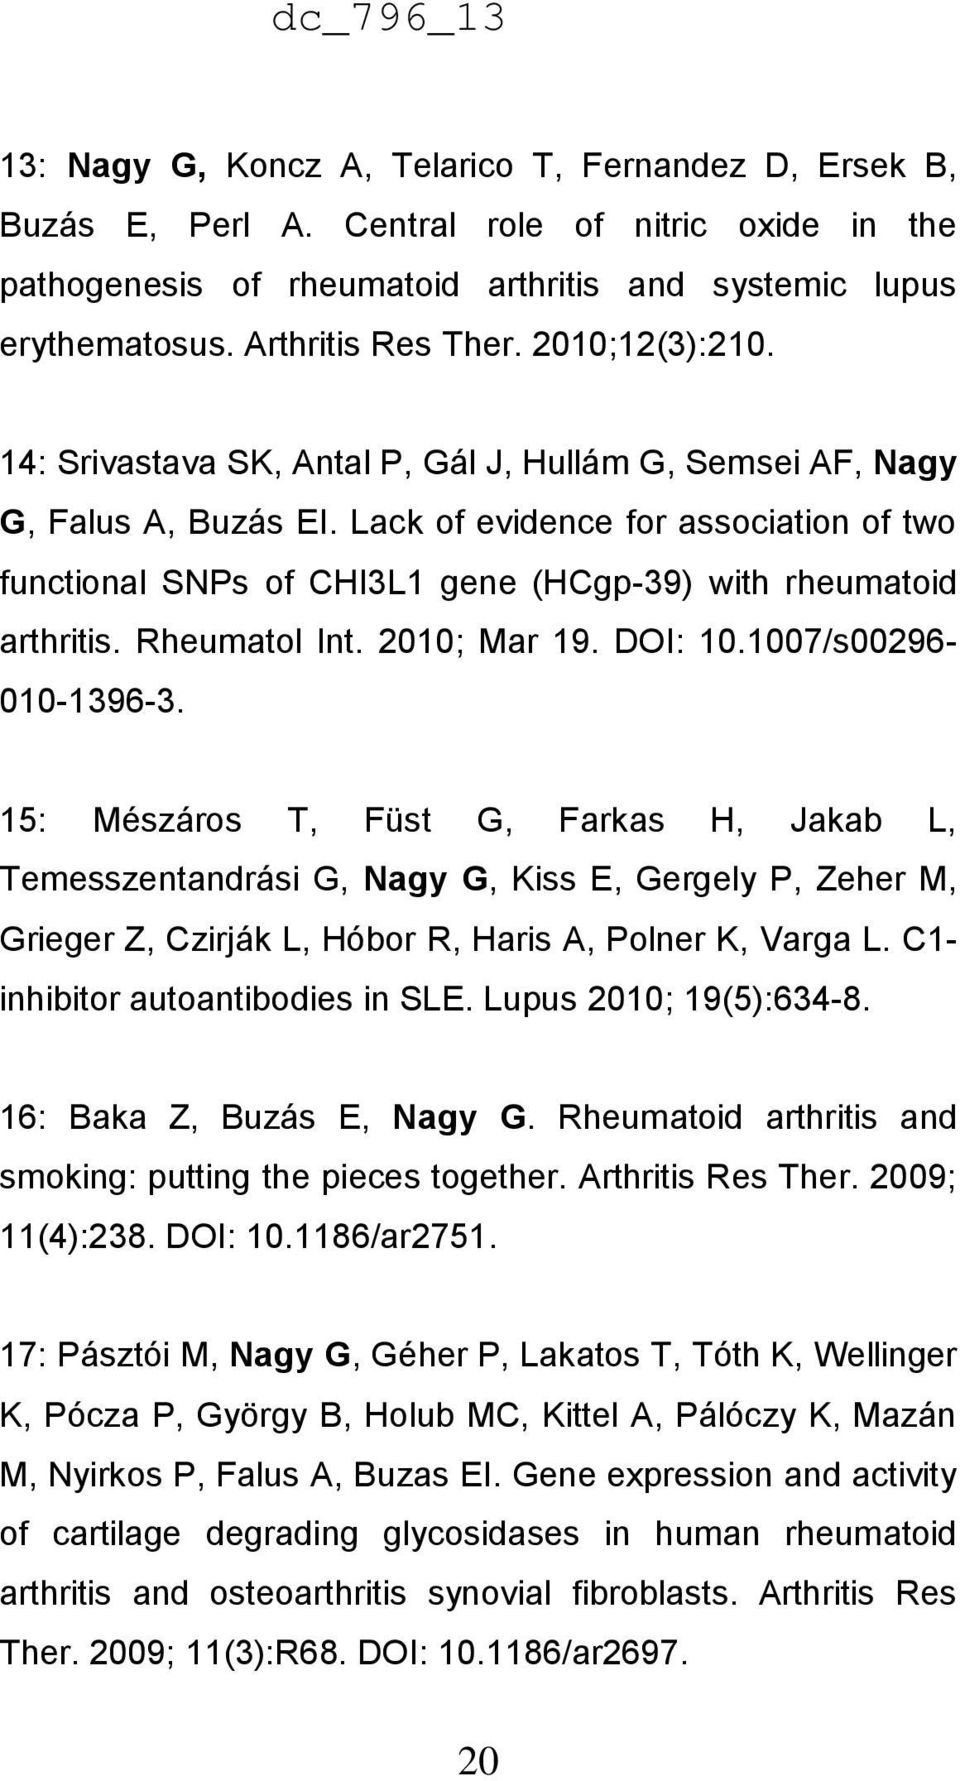 Lack of evidence for association of two functional SNPs of CHI3L1 gene (HCgp-39) with rheumatoid arthritis. Rheumatol Int. 2010; Mar 19. DOI: 10.1007/s00296-010-1396-3.